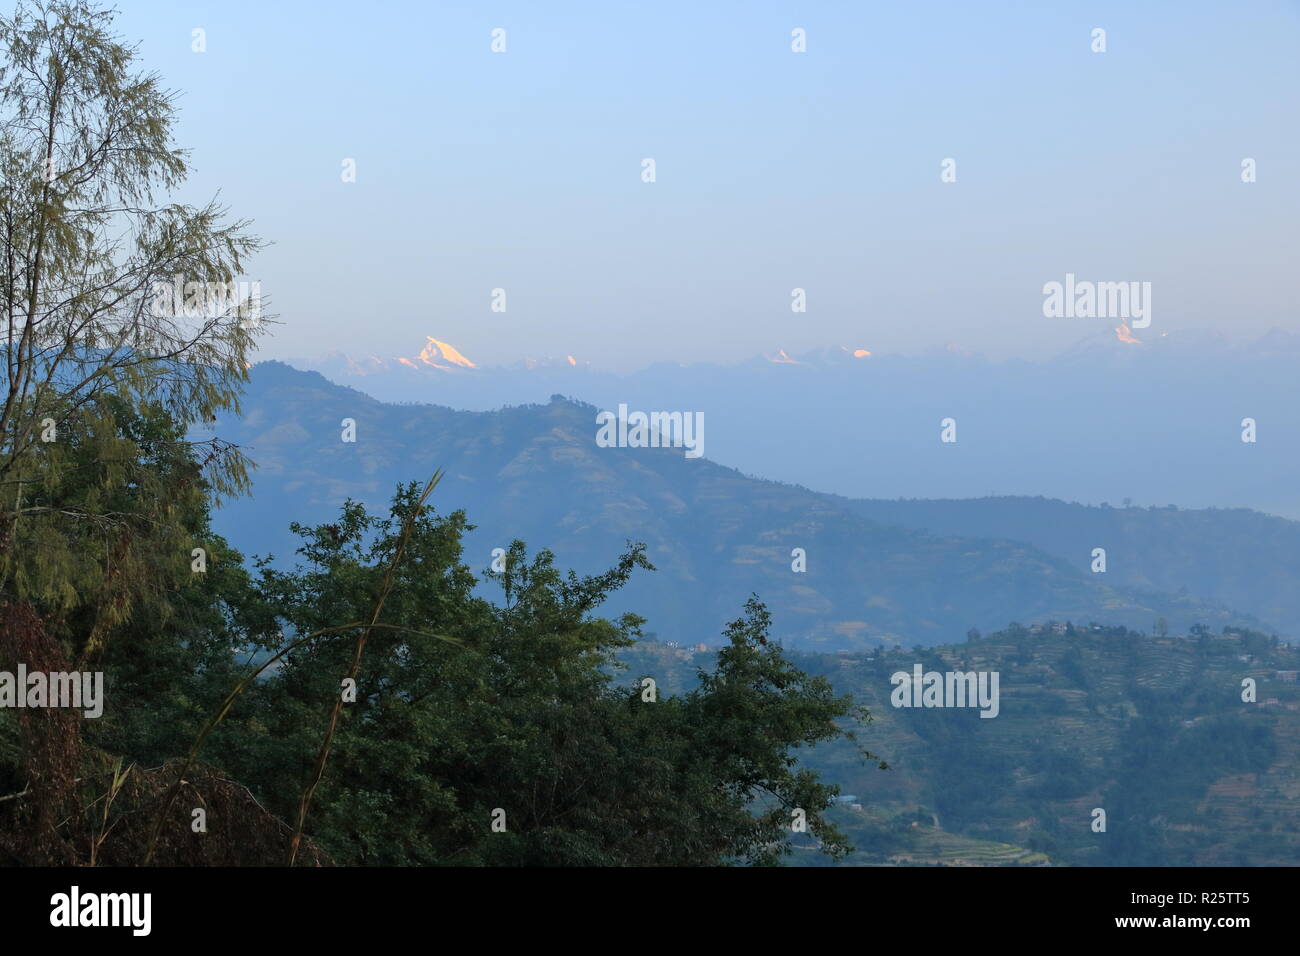 Beautiful first light from sunrise on Himalaya mountain range in Nepal Stock Photo